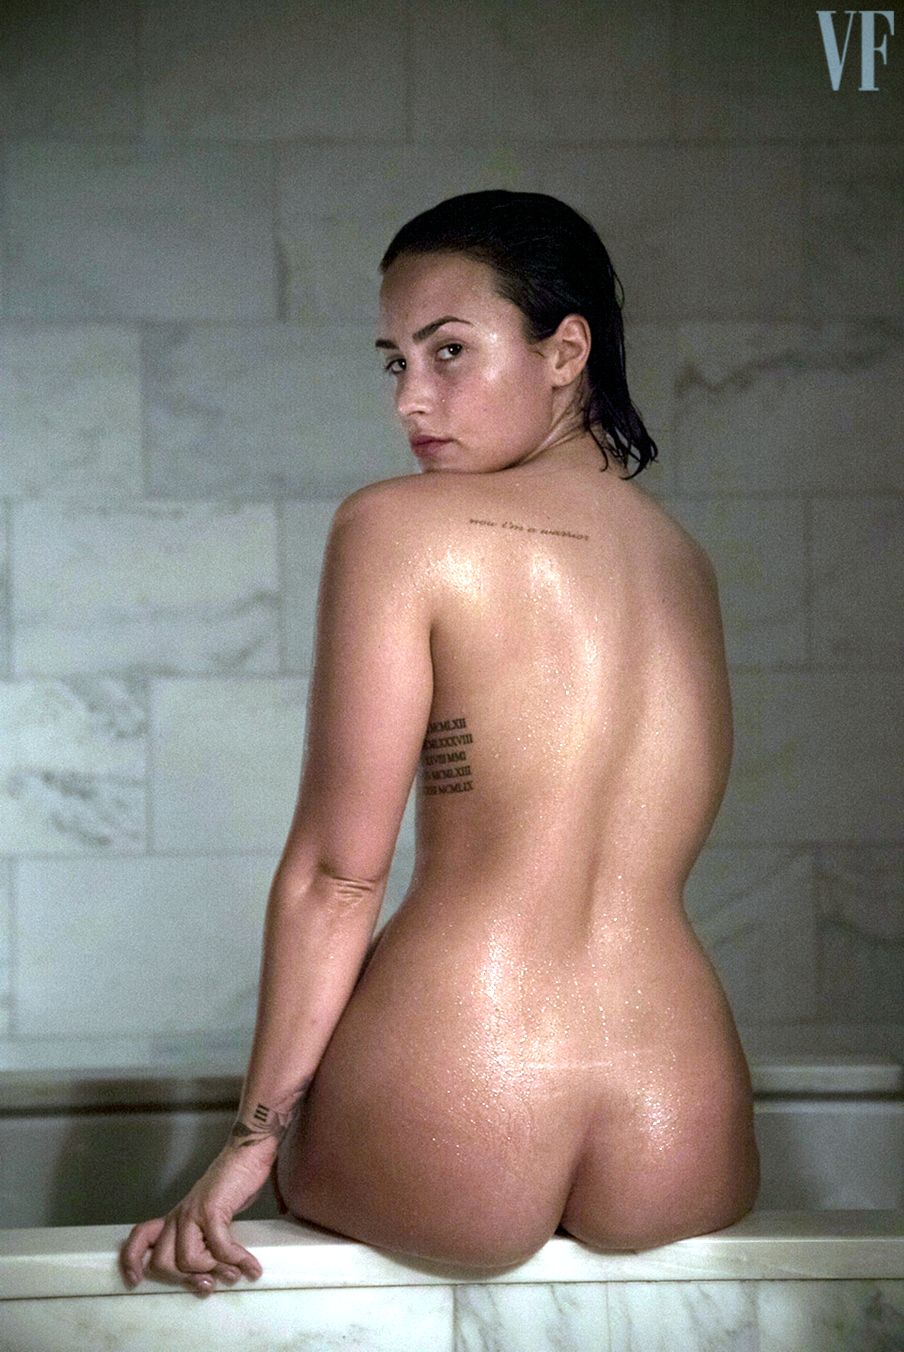 Demi Lobato poses naked